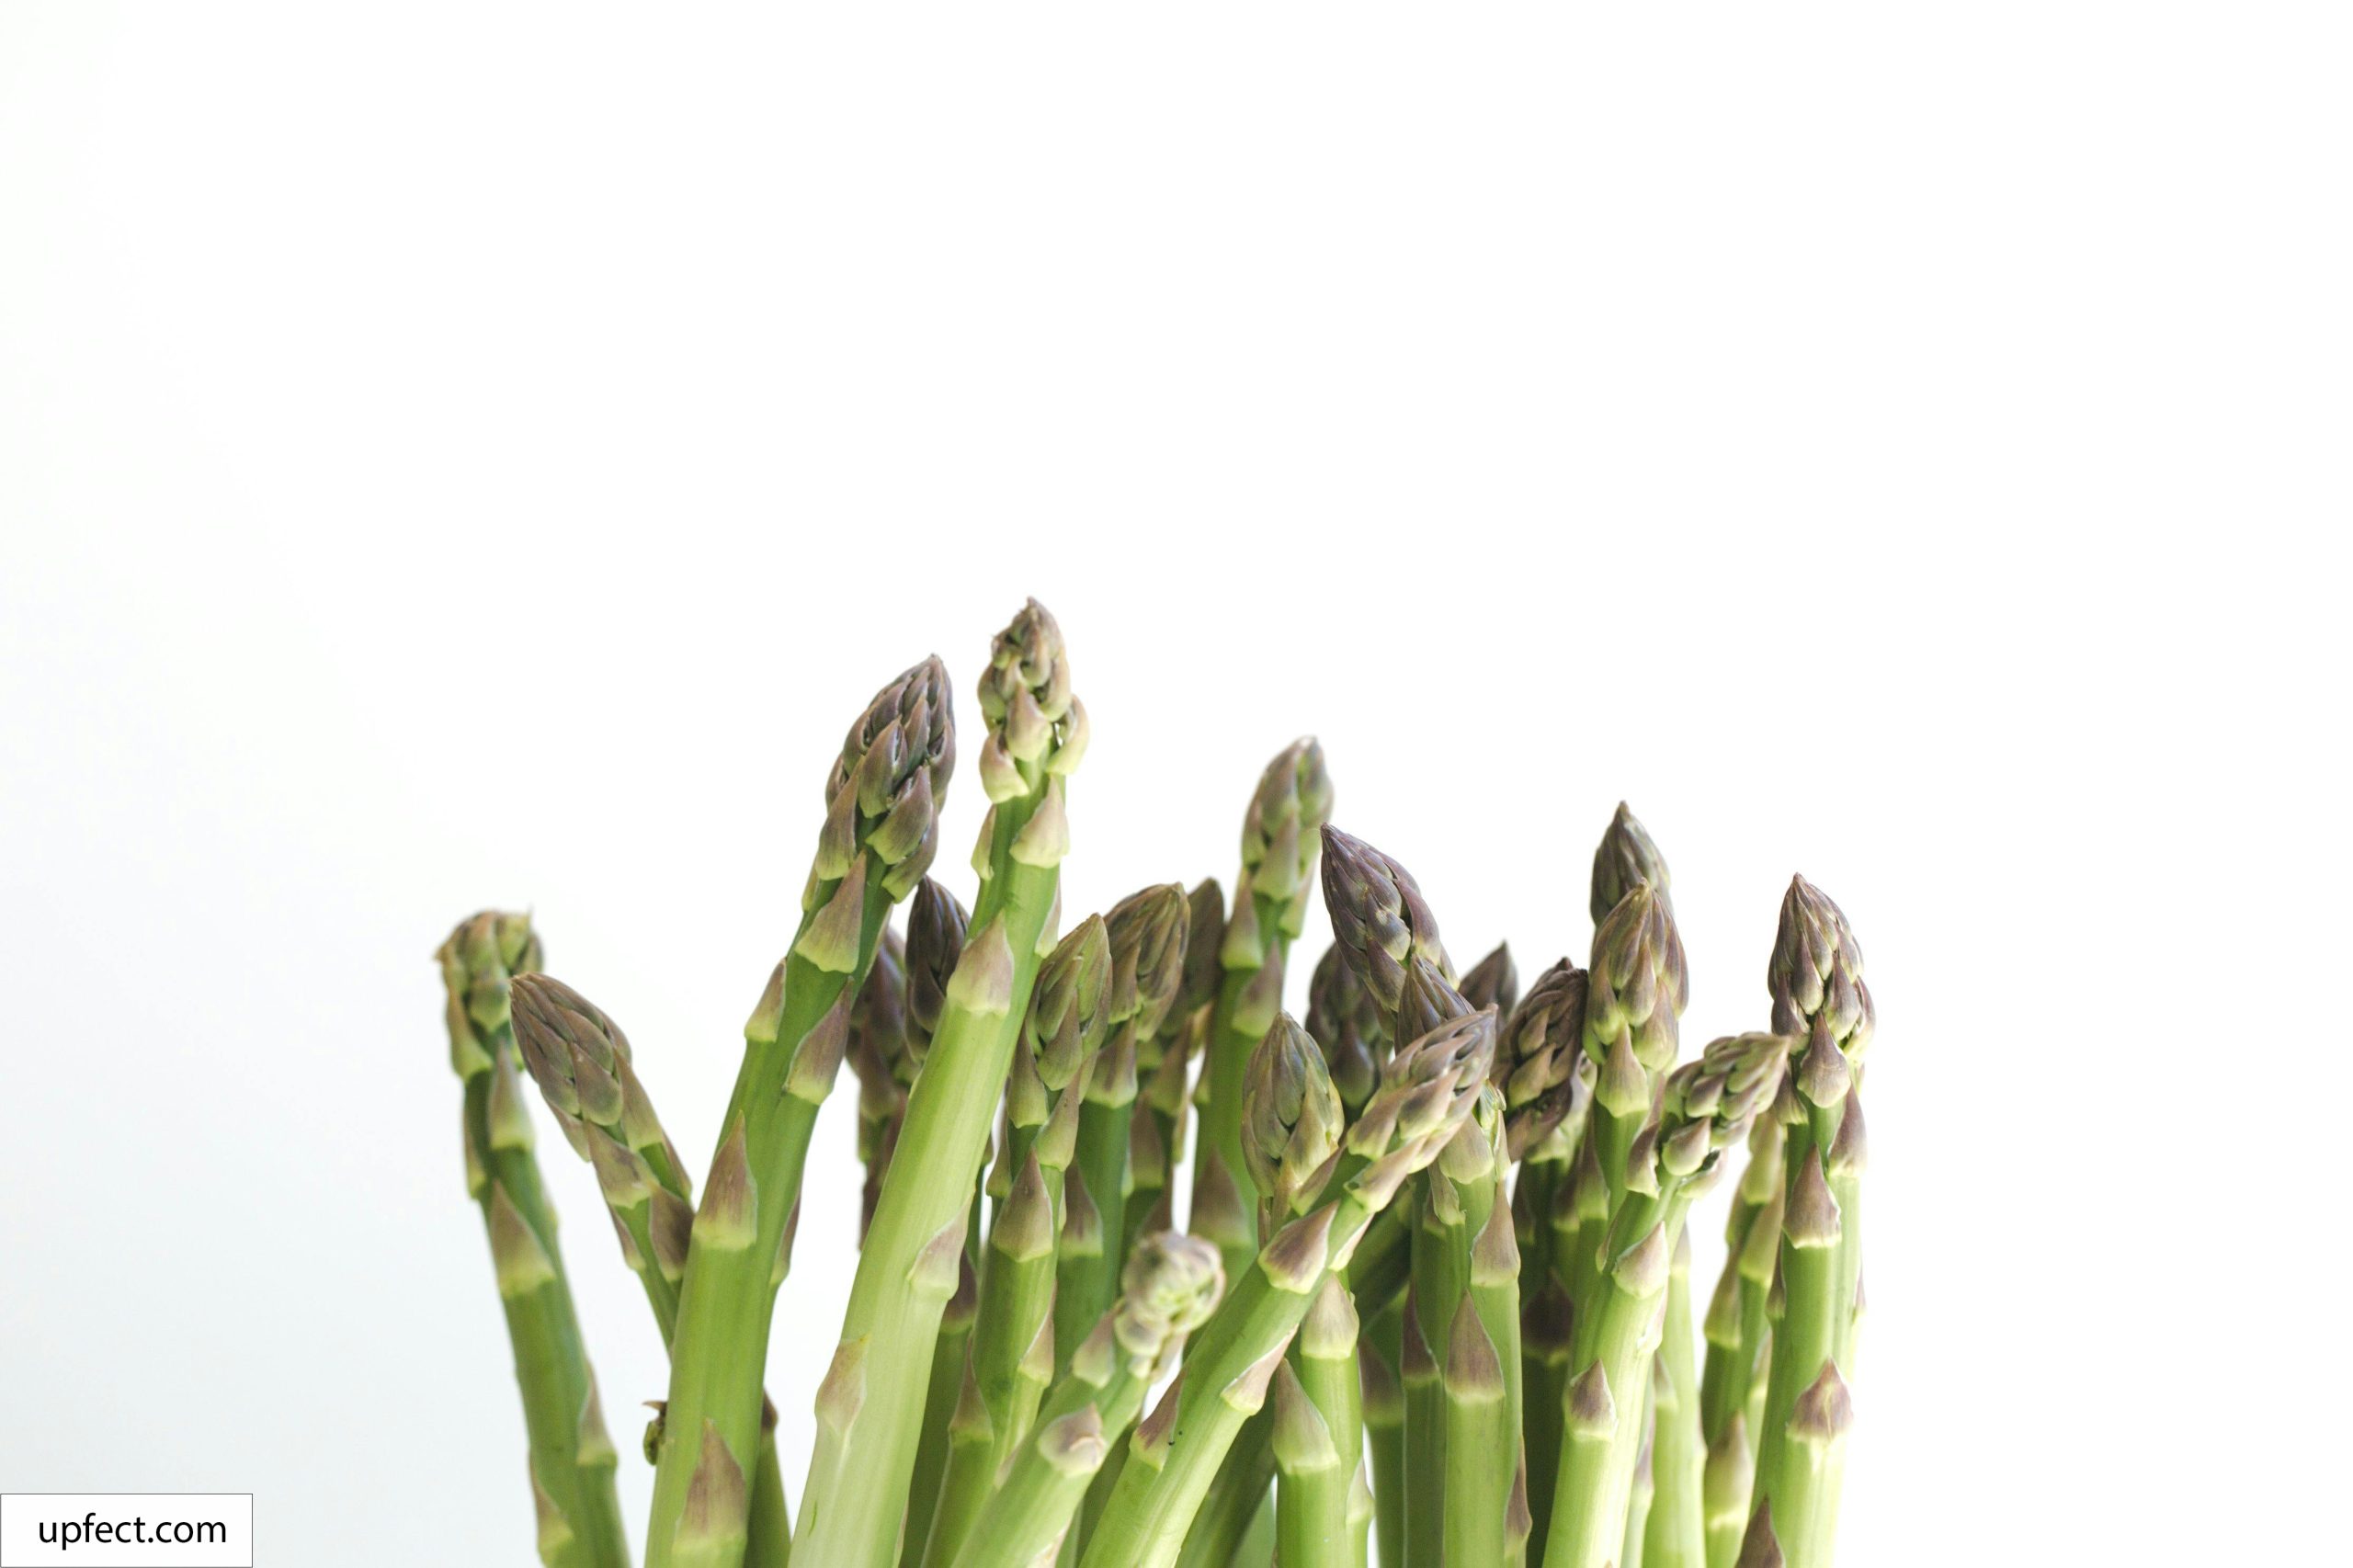 asparagus has a vitamin K